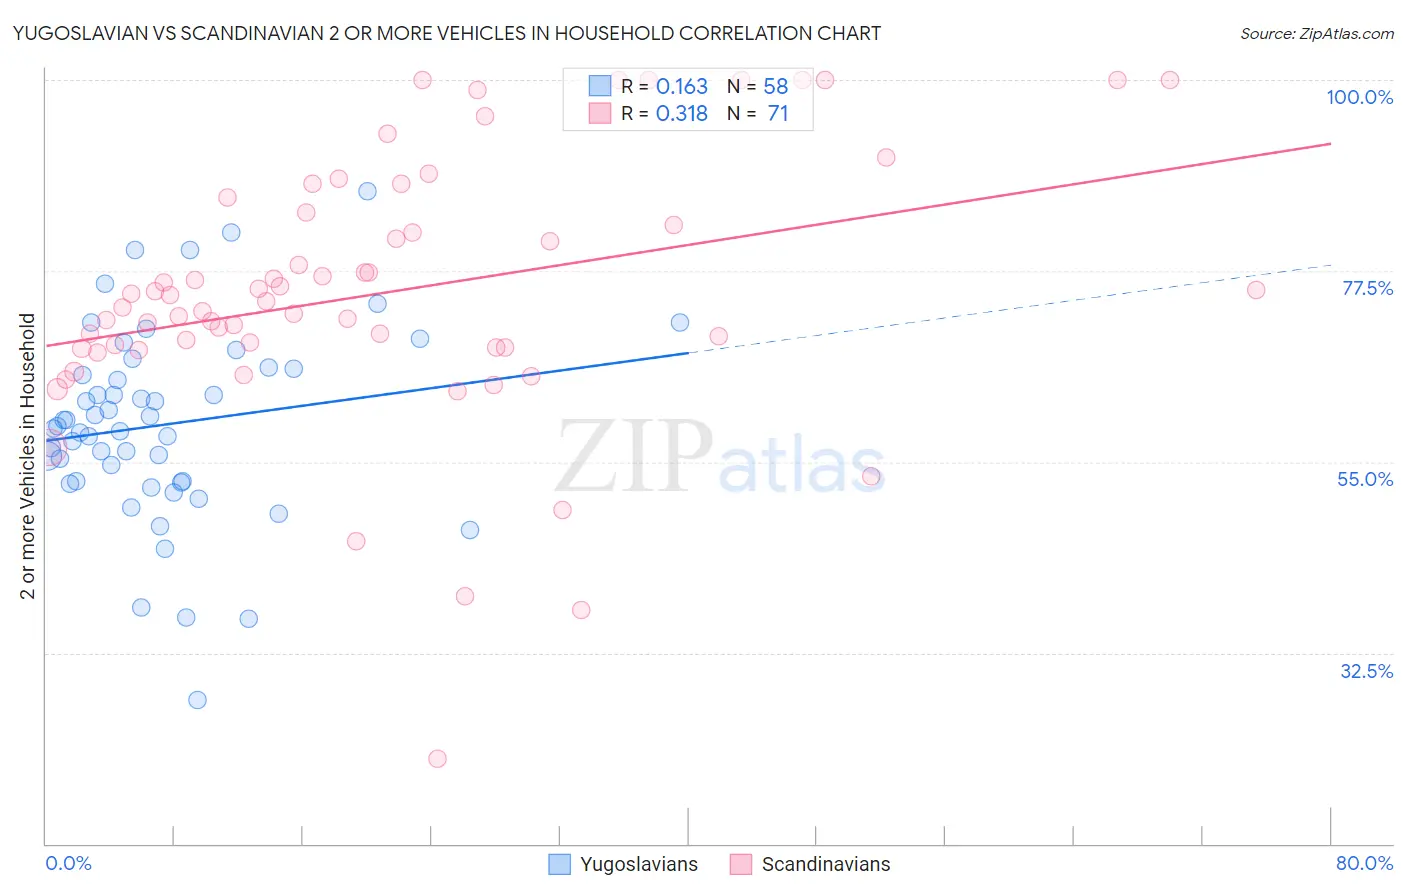 Yugoslavian vs Scandinavian 2 or more Vehicles in Household